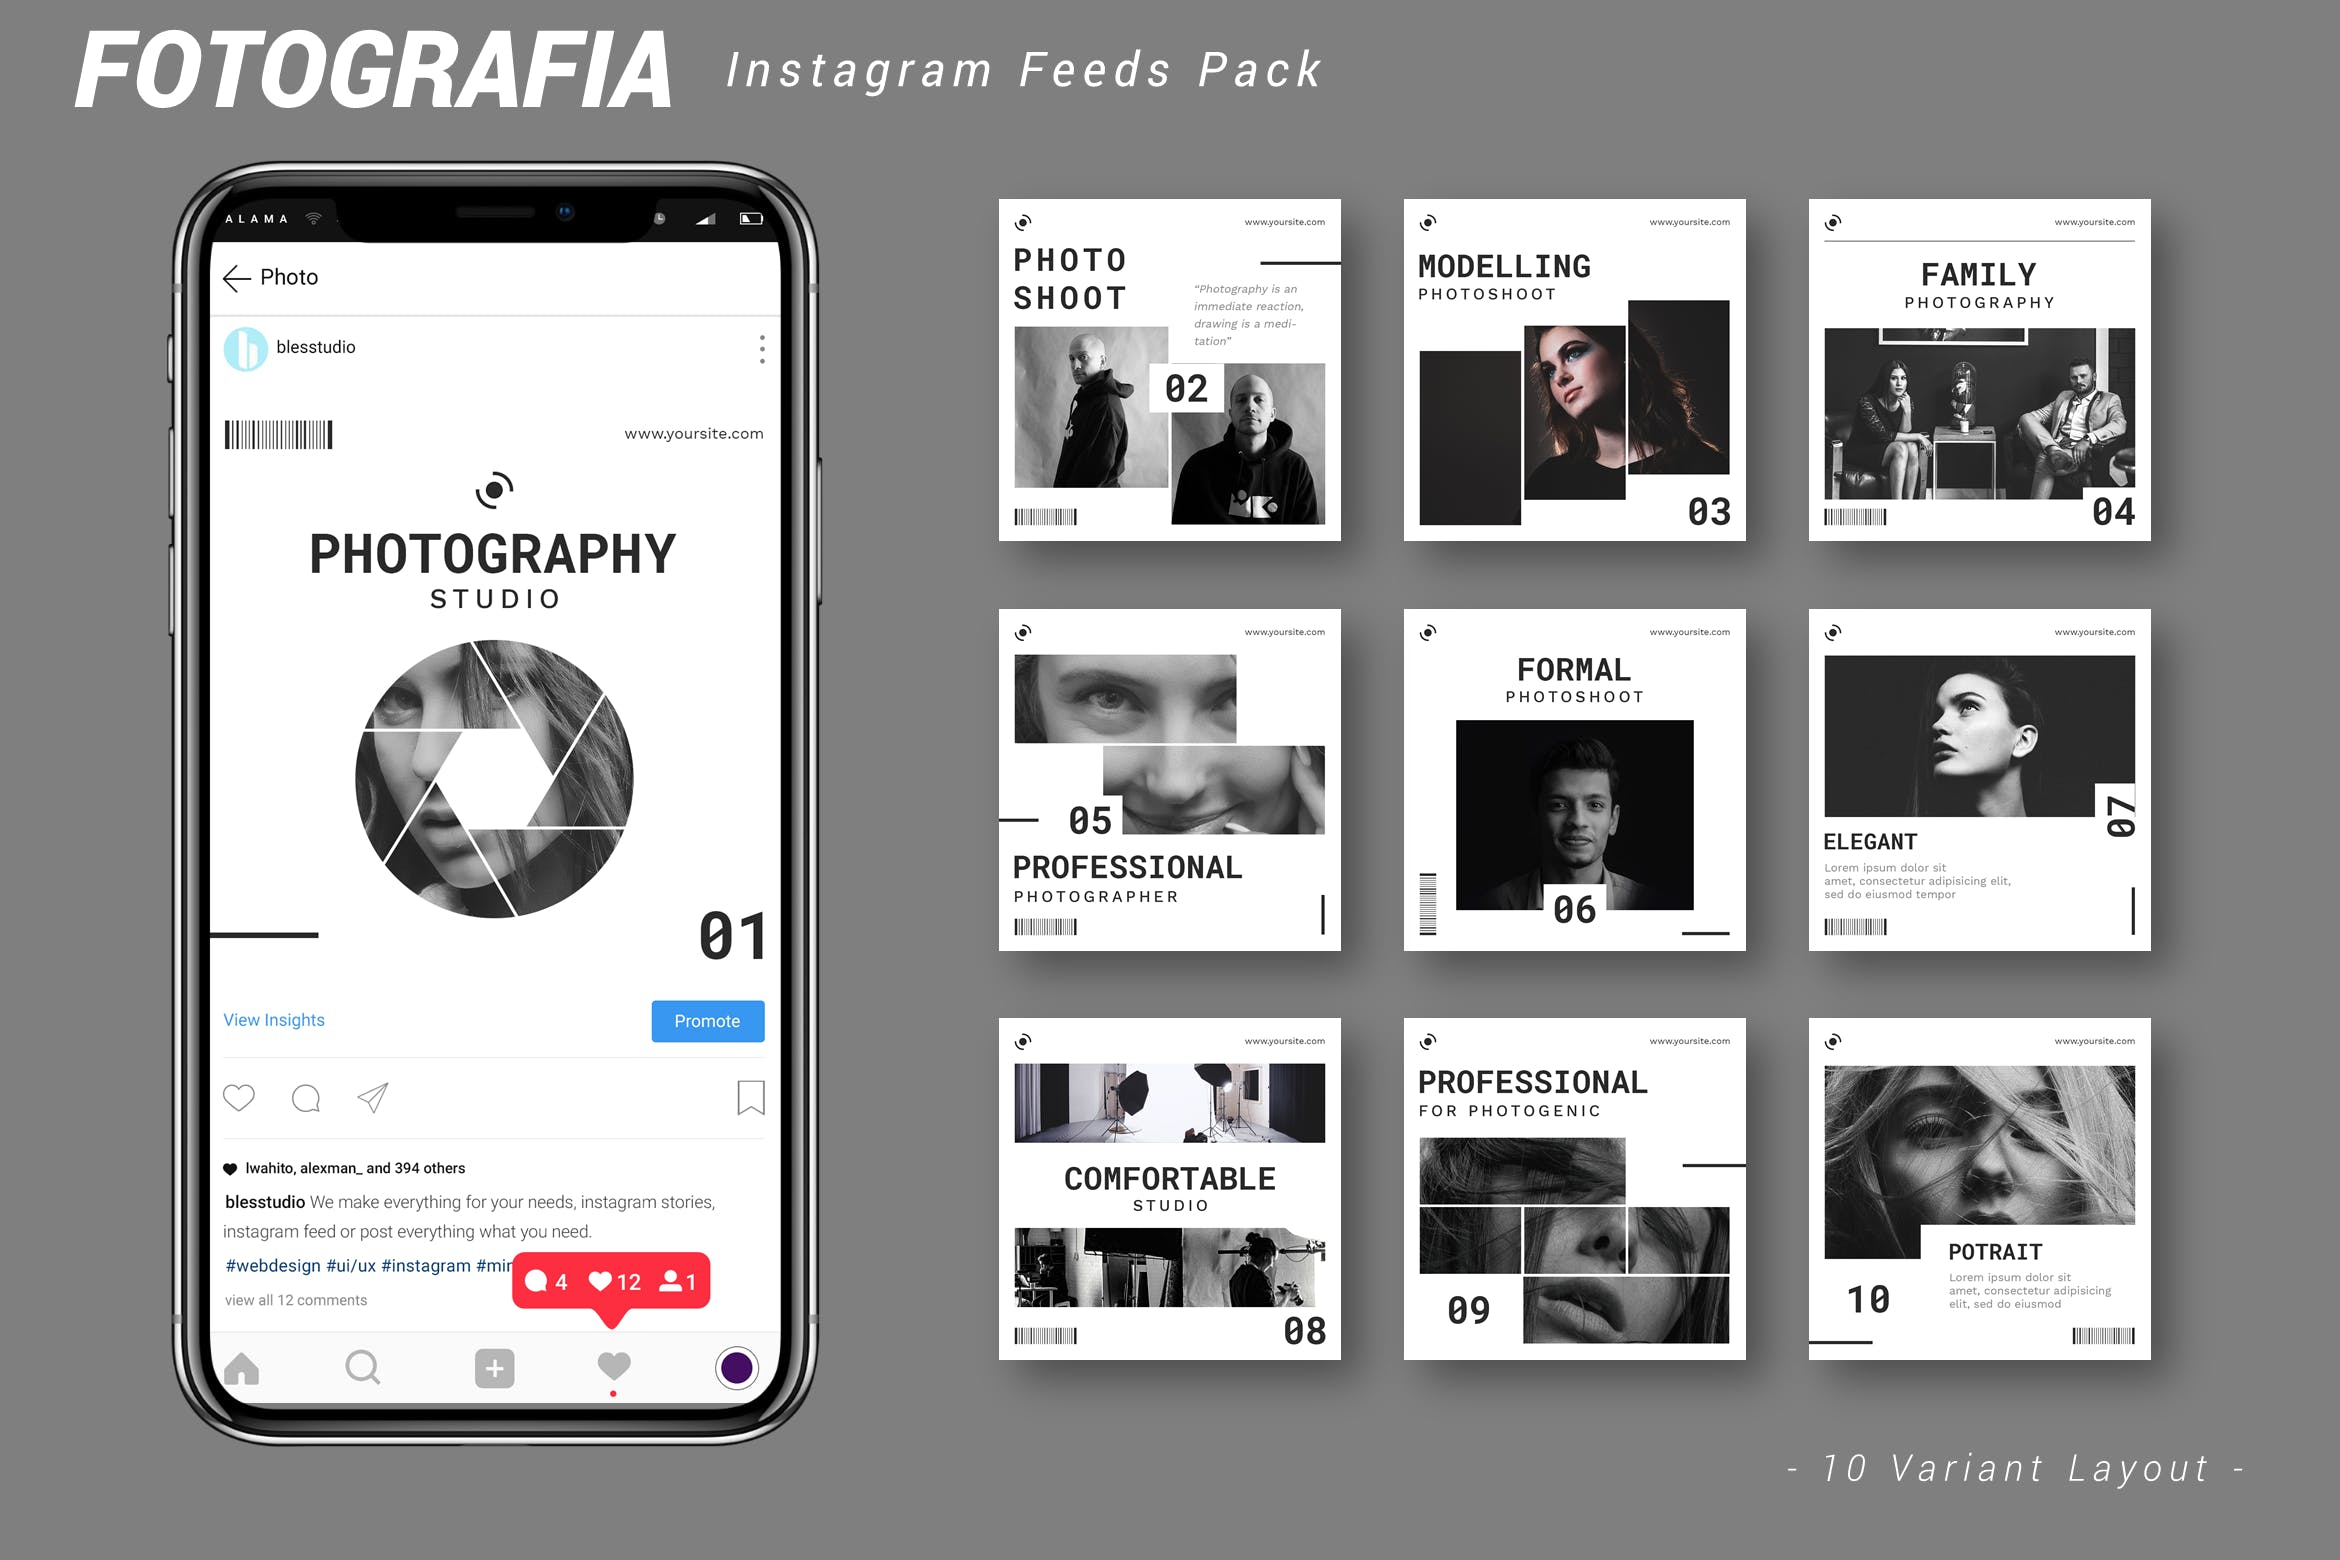 Instagram信息流黑白配色贴图设计模板素材库精选 Fotografia – Instagram Feeds Pack插图